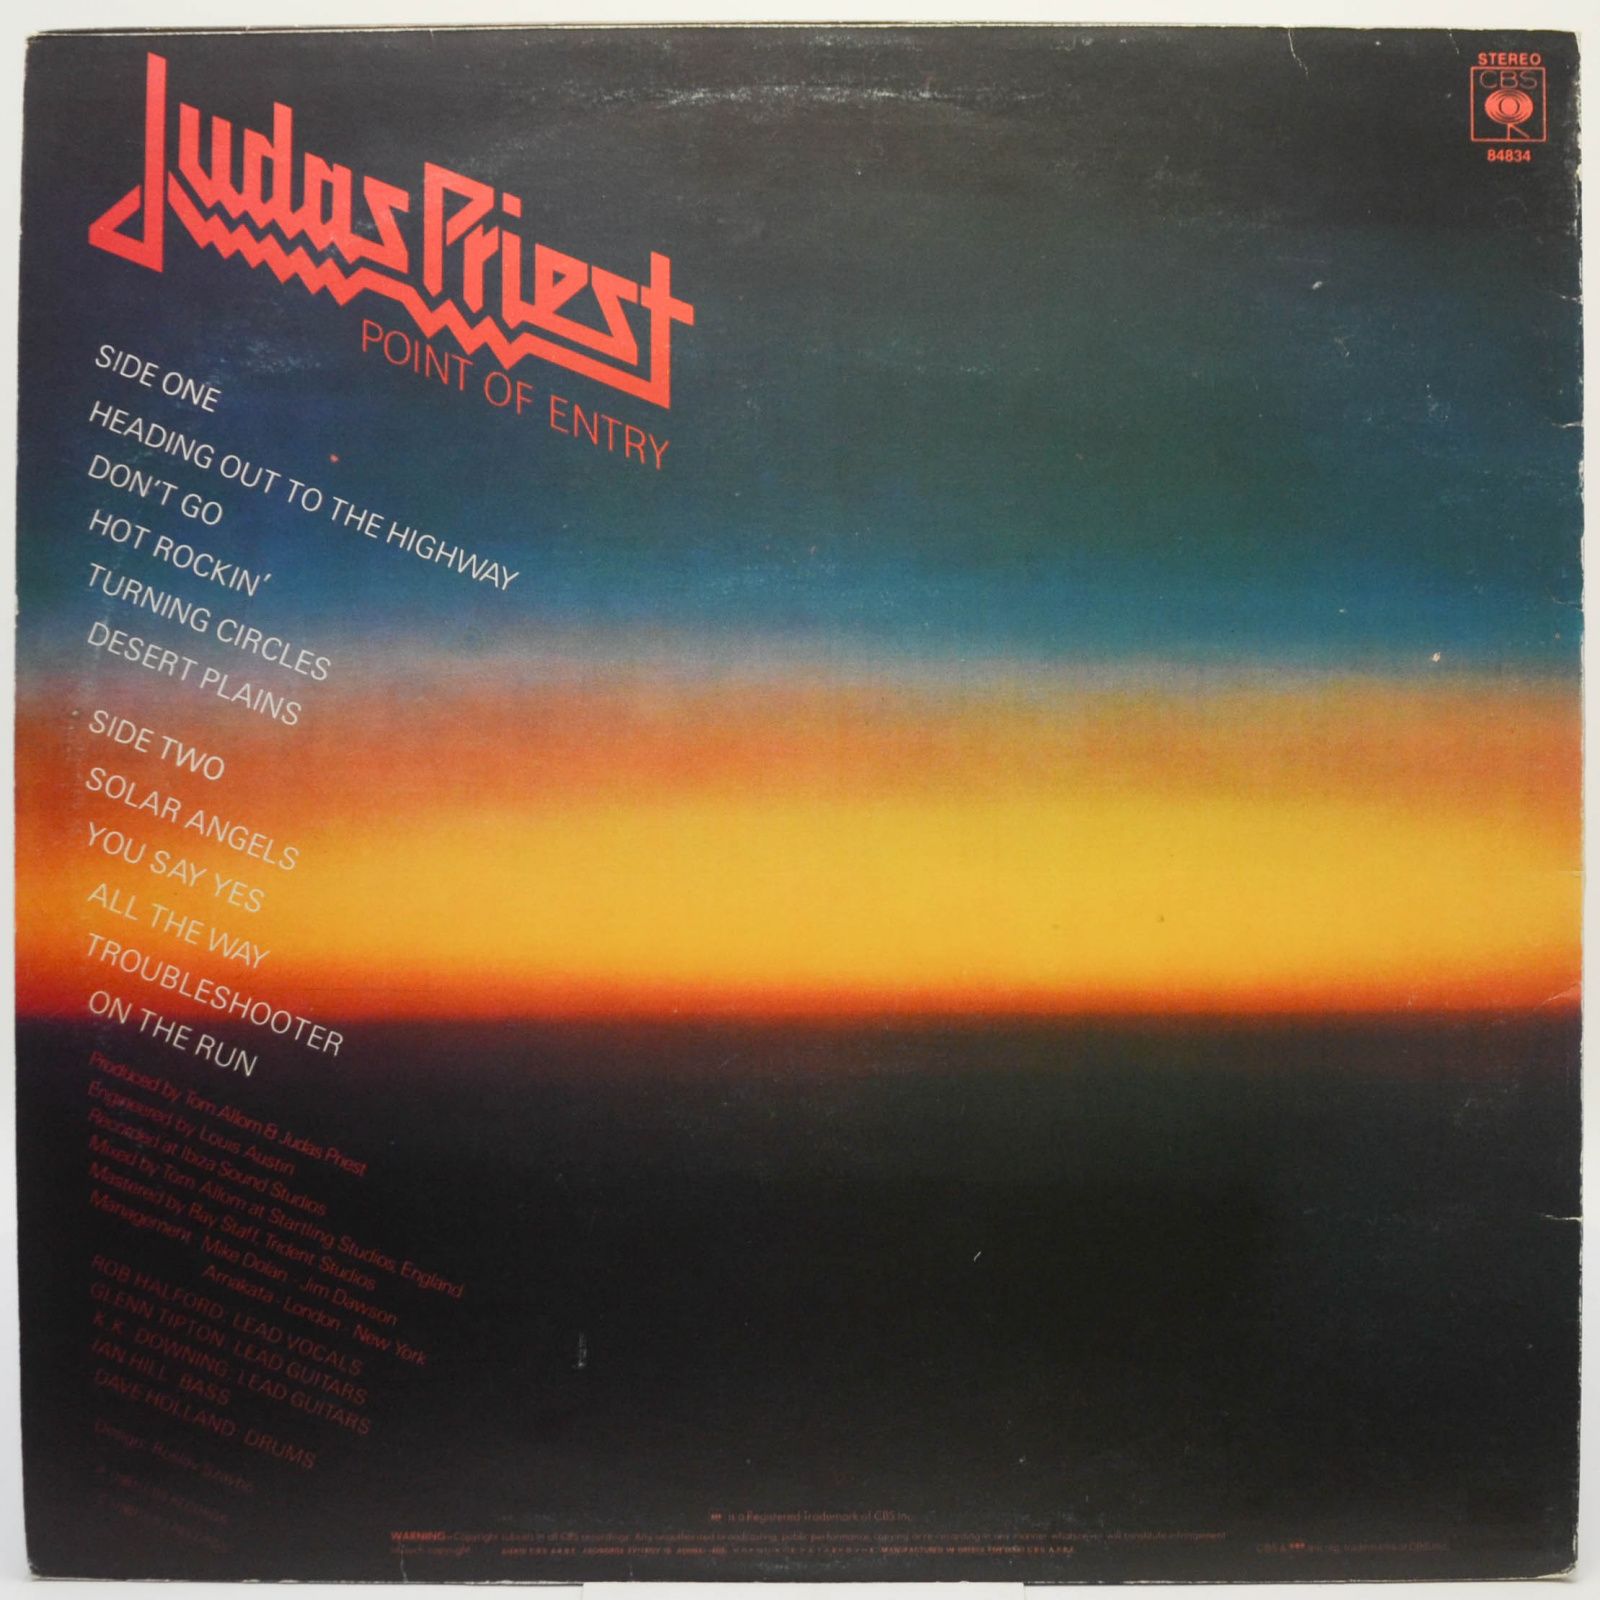 Judas Priest "point of entry". Judas Priest point of entry LP. Judas in Priest albums.